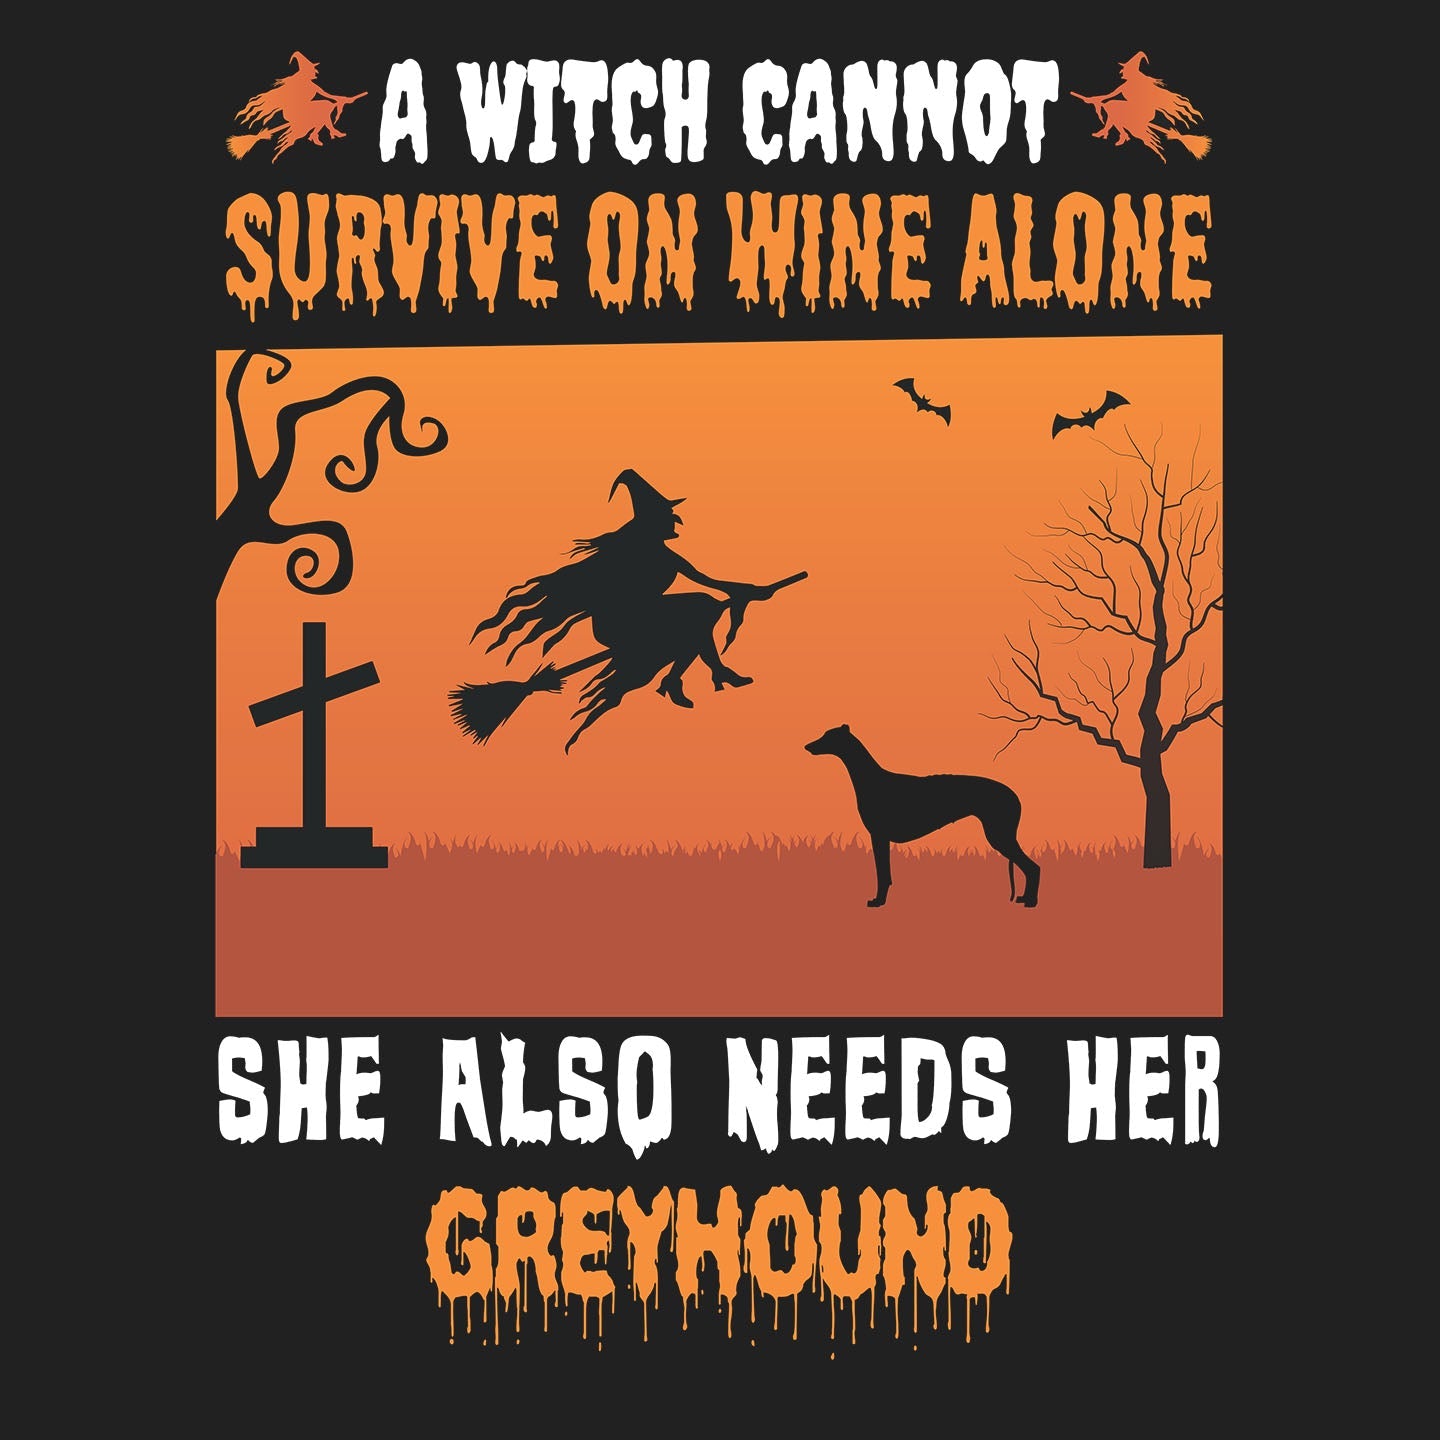 A Witch Needs Her Greyhound - Women's V-Neck T-Shirt